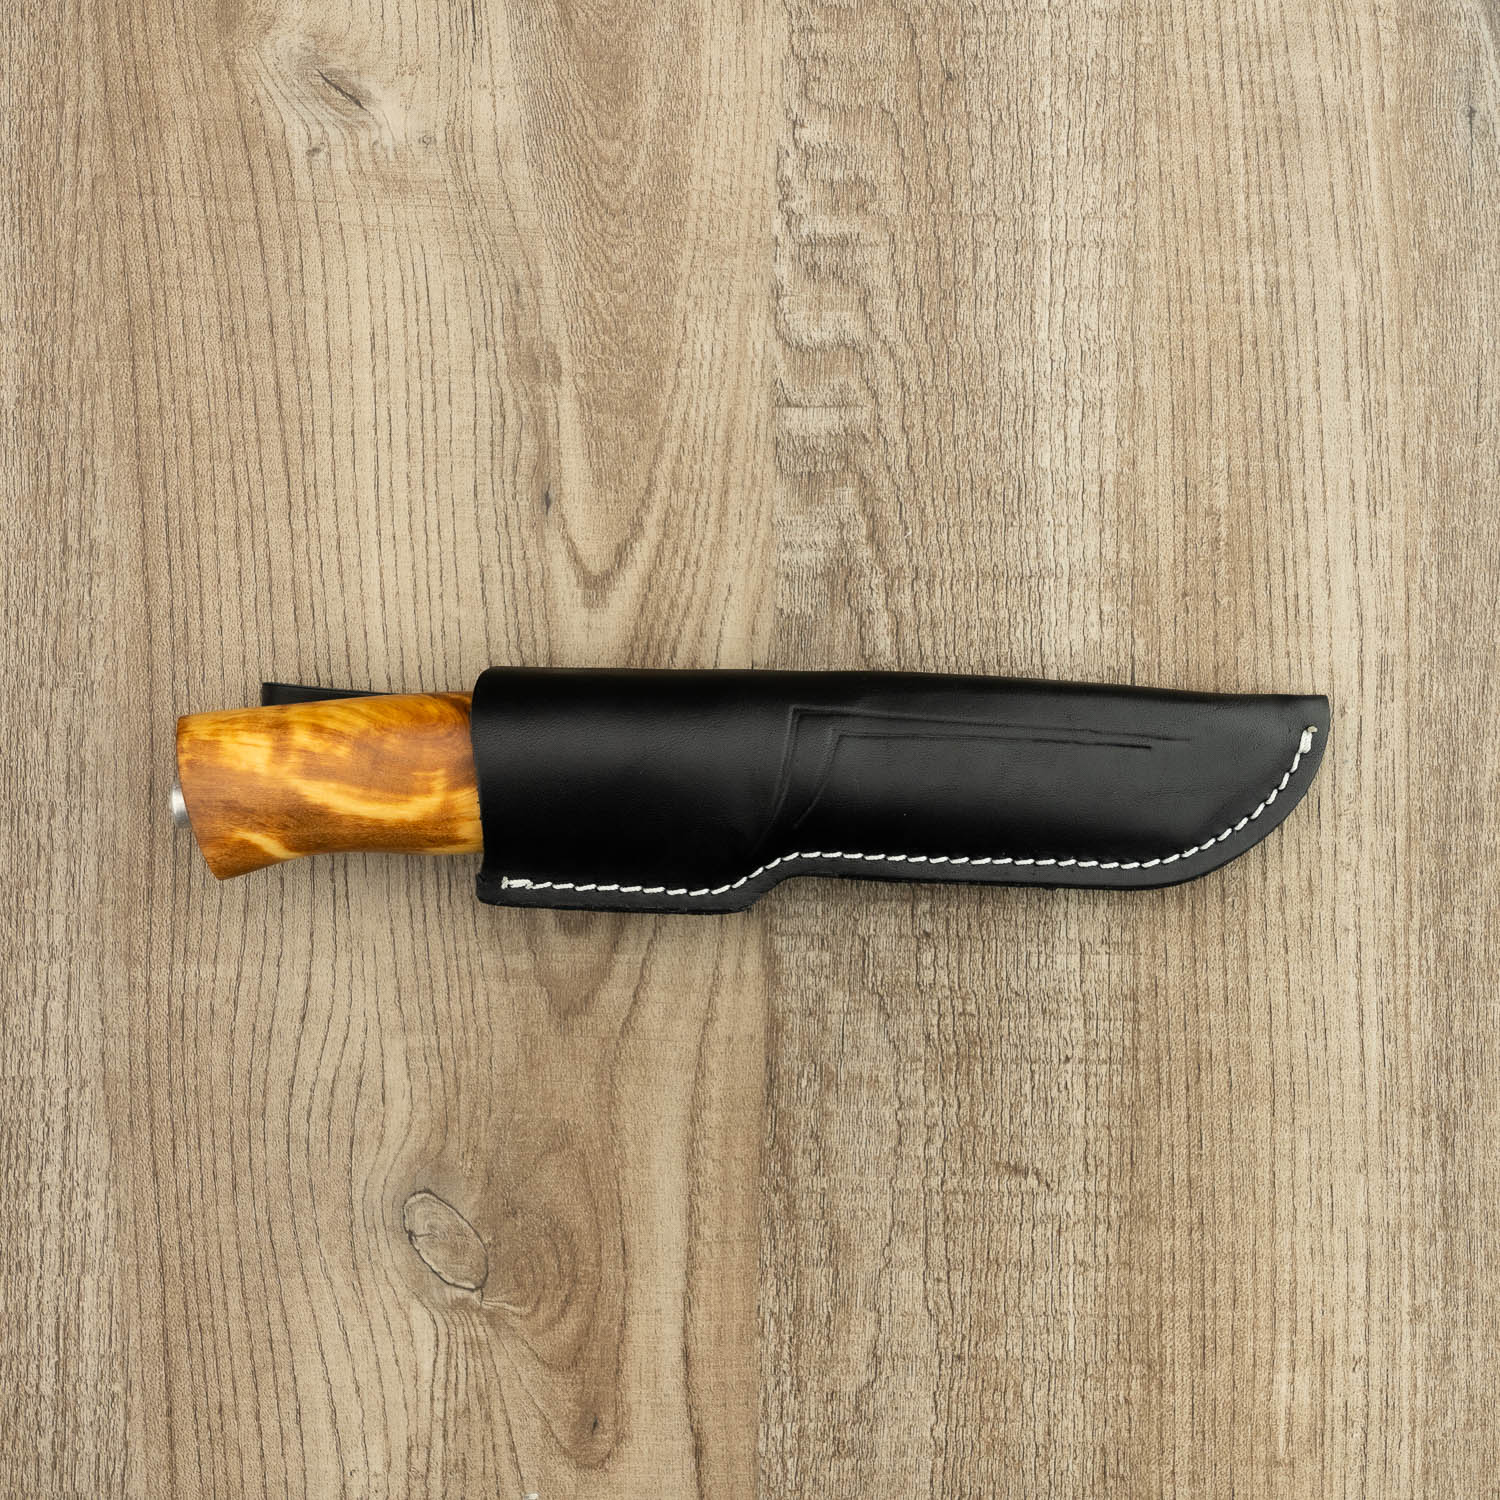 Survival Gear Review: Helle's New Folding Bushcraft Knife, the Bleja